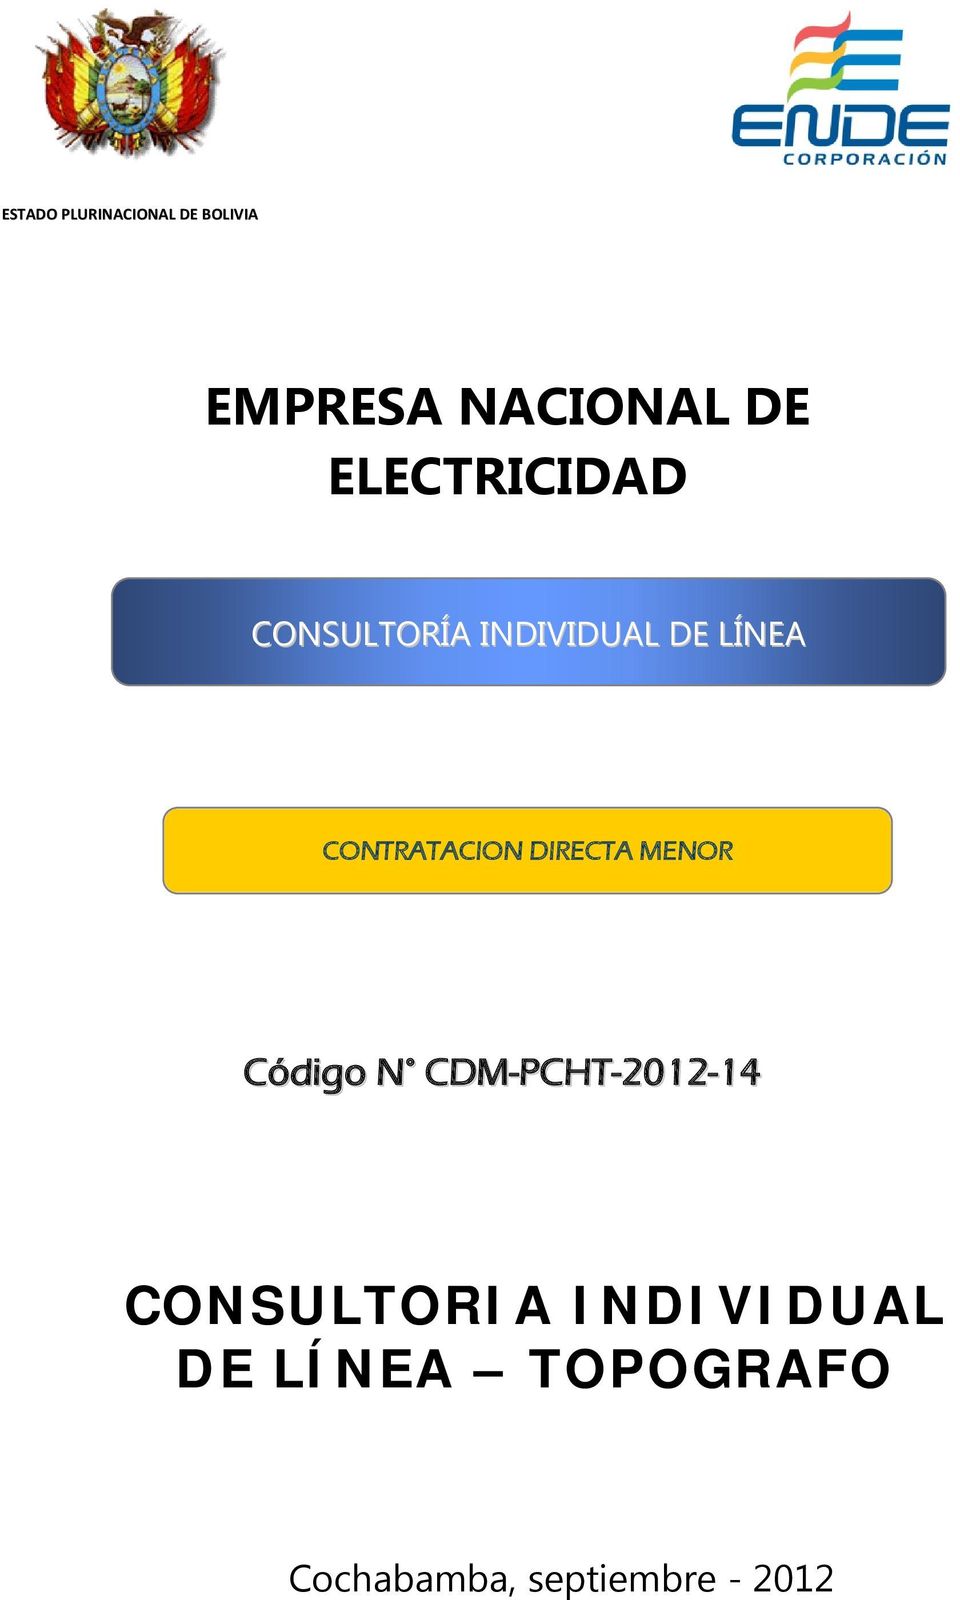 CONTRATACION DIRECTA MENOR Código N CDM-PCHT-2012-14